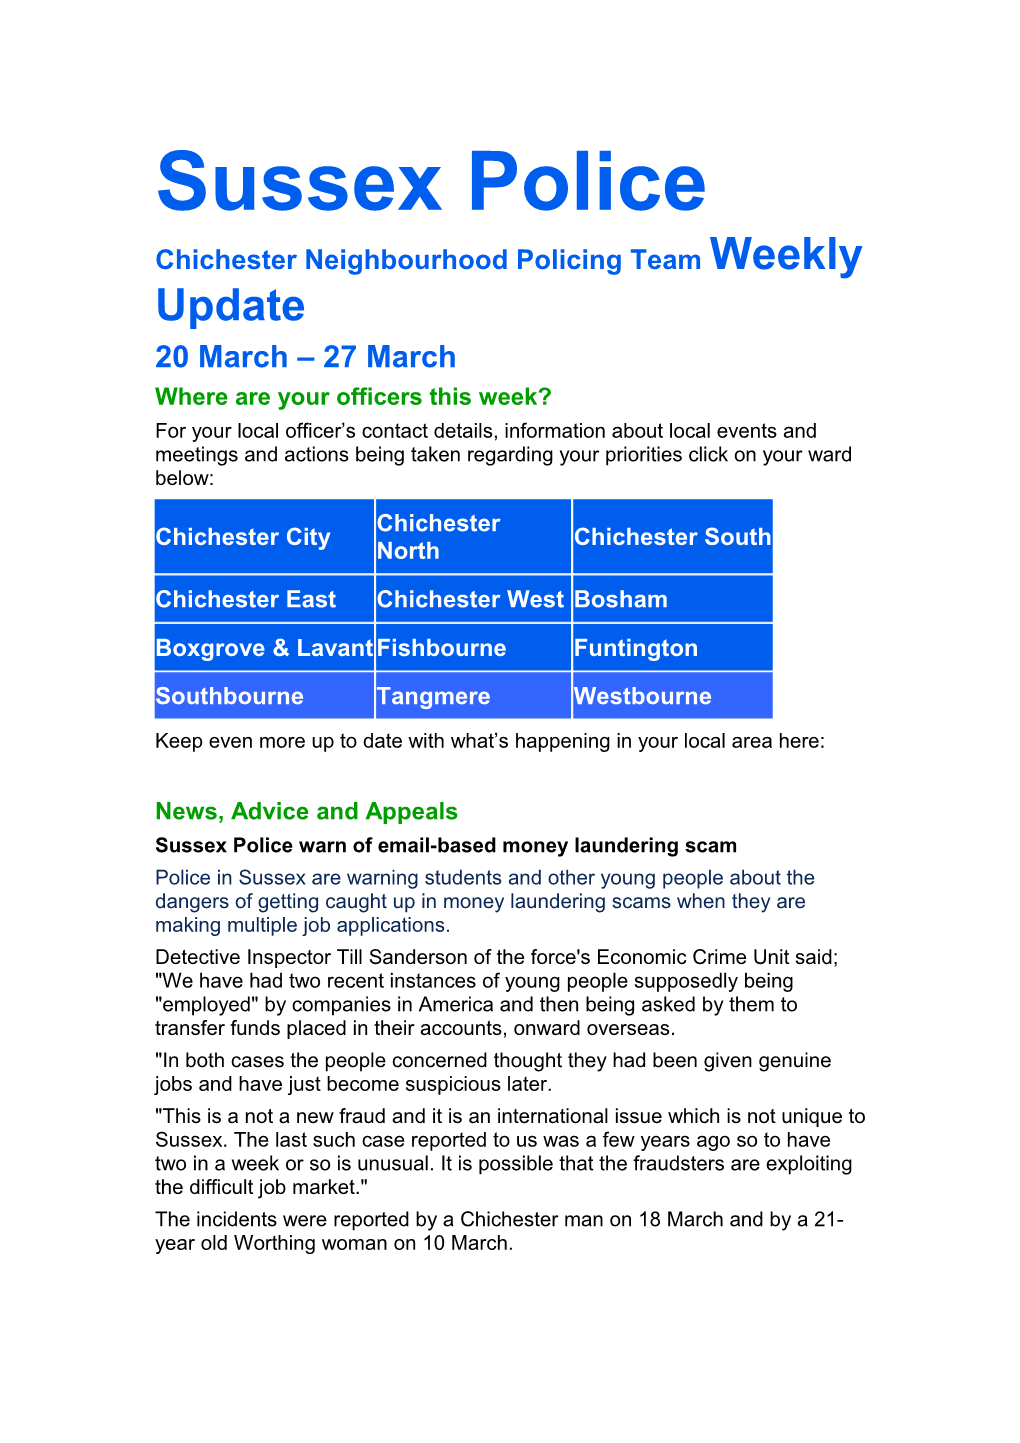 Sussex Police Chichester Neighbourhood Policing Team Weekly Update